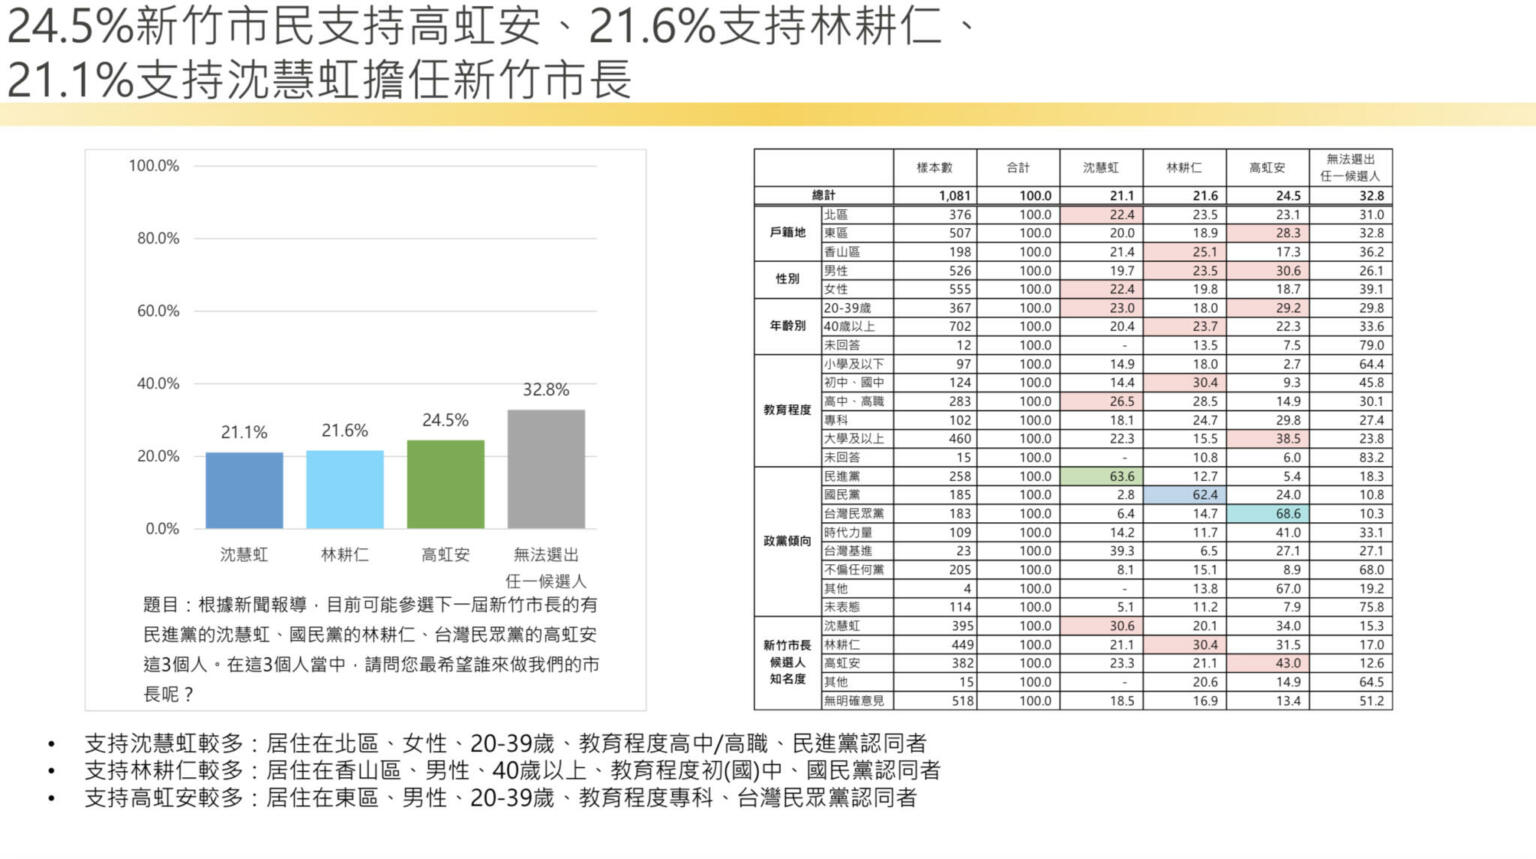 Re: [討論] 匯流民調-高24.5% 林21.6% 沈21.1%